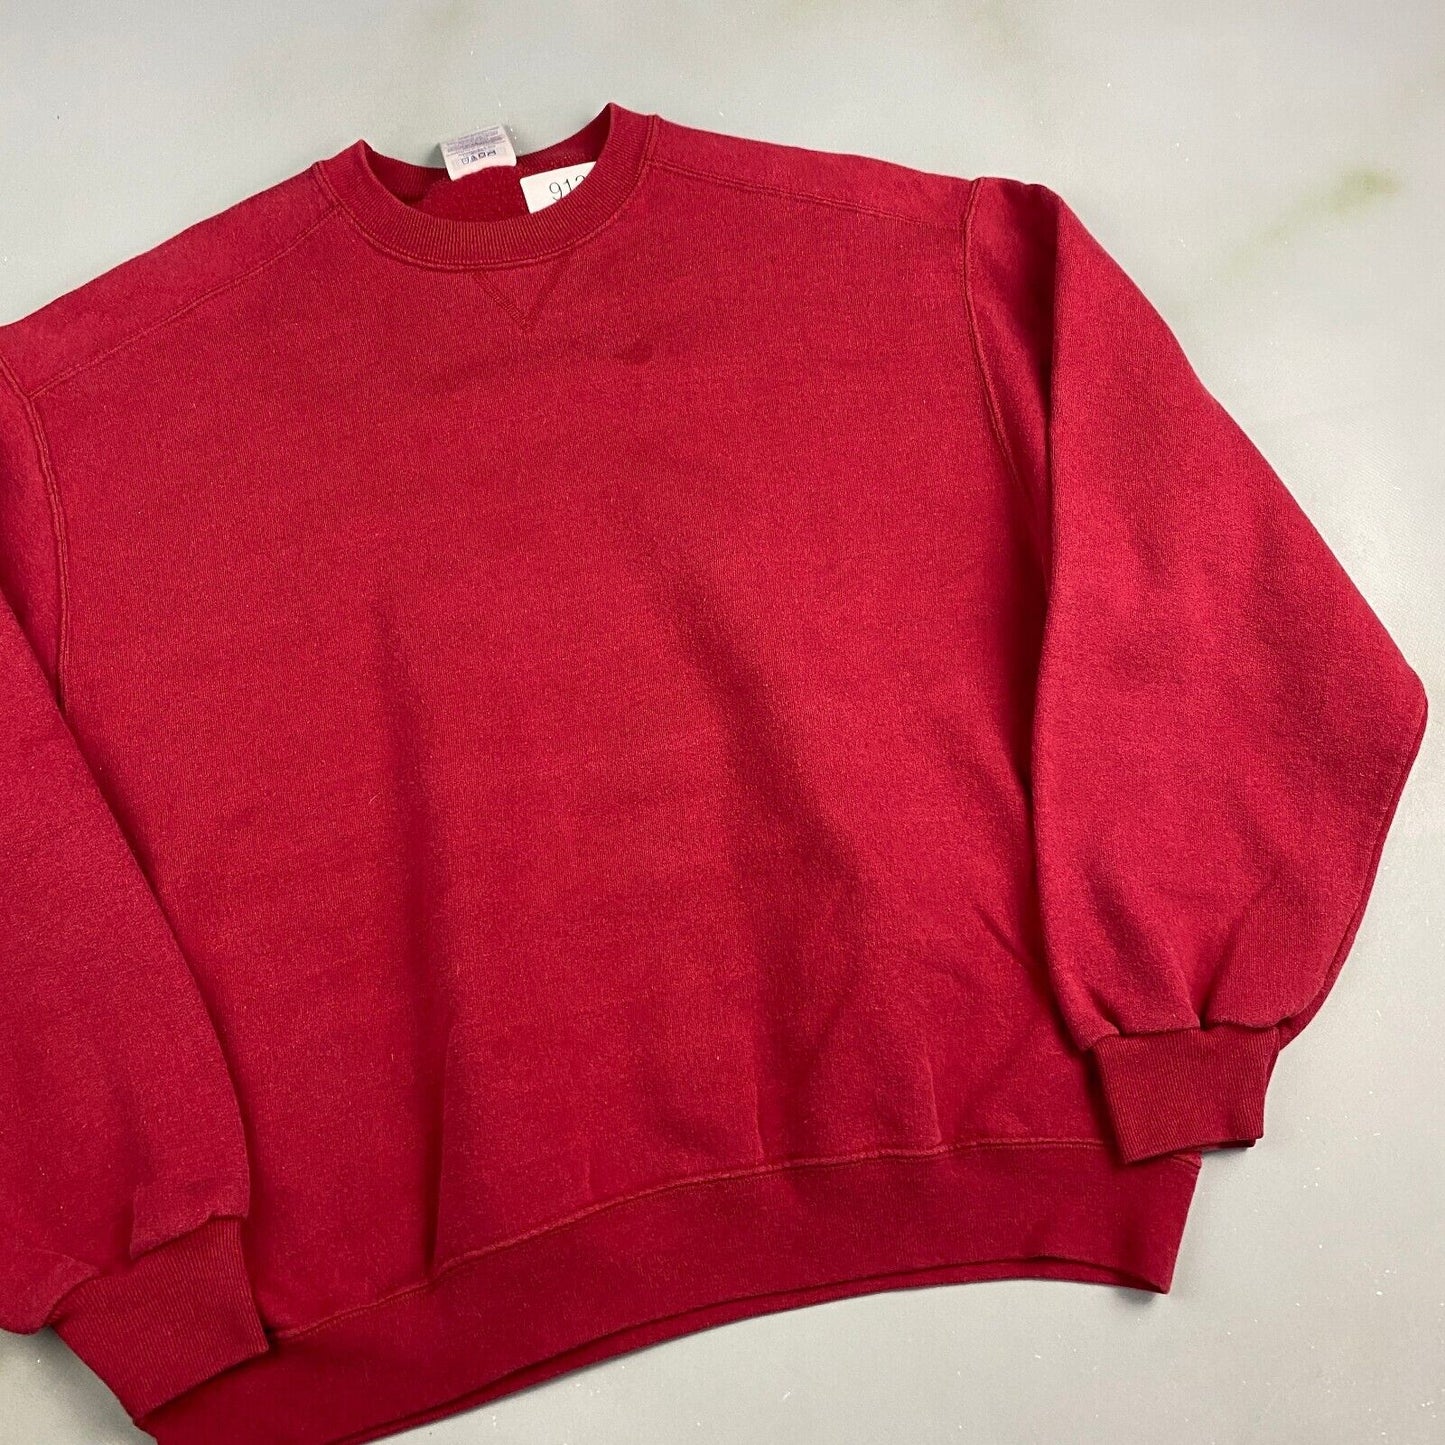 VINTAGE 90s Blank Red Jerzees Crewneck Sweater sz Large Men Adult